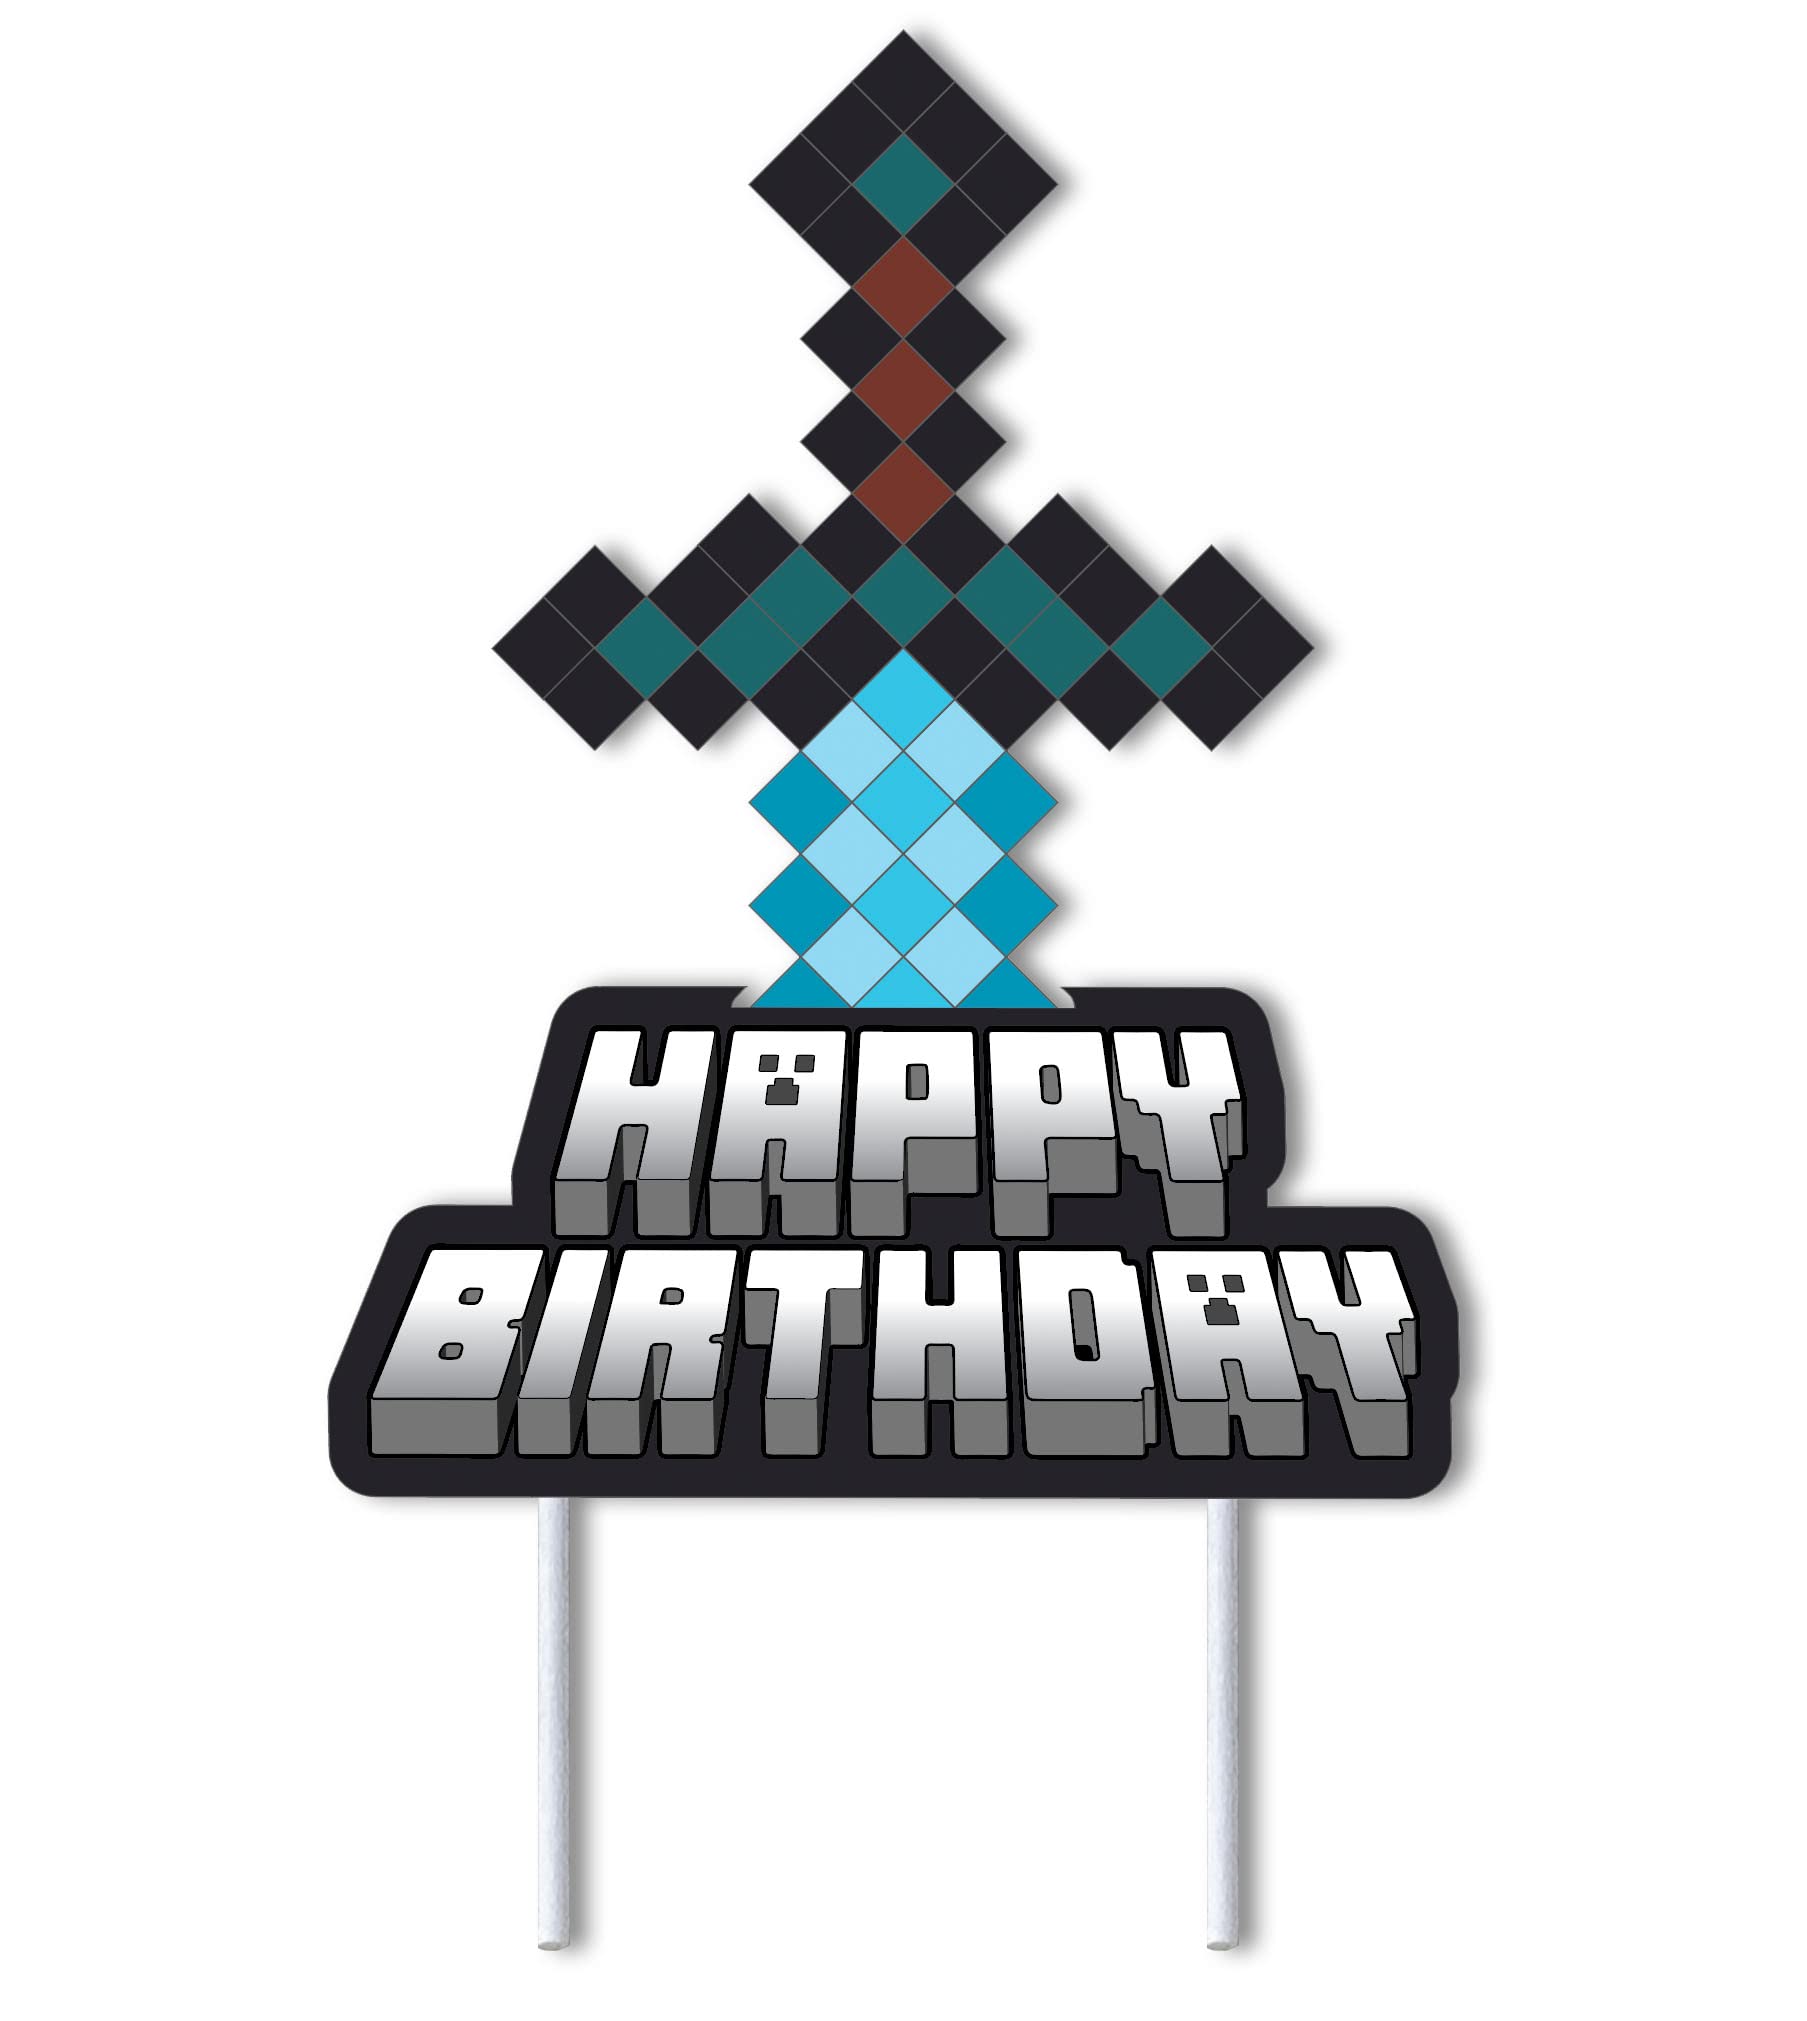 Mining Craft Pixel Gamer Gaming Birthday Cake Topper Video Game Mine Party